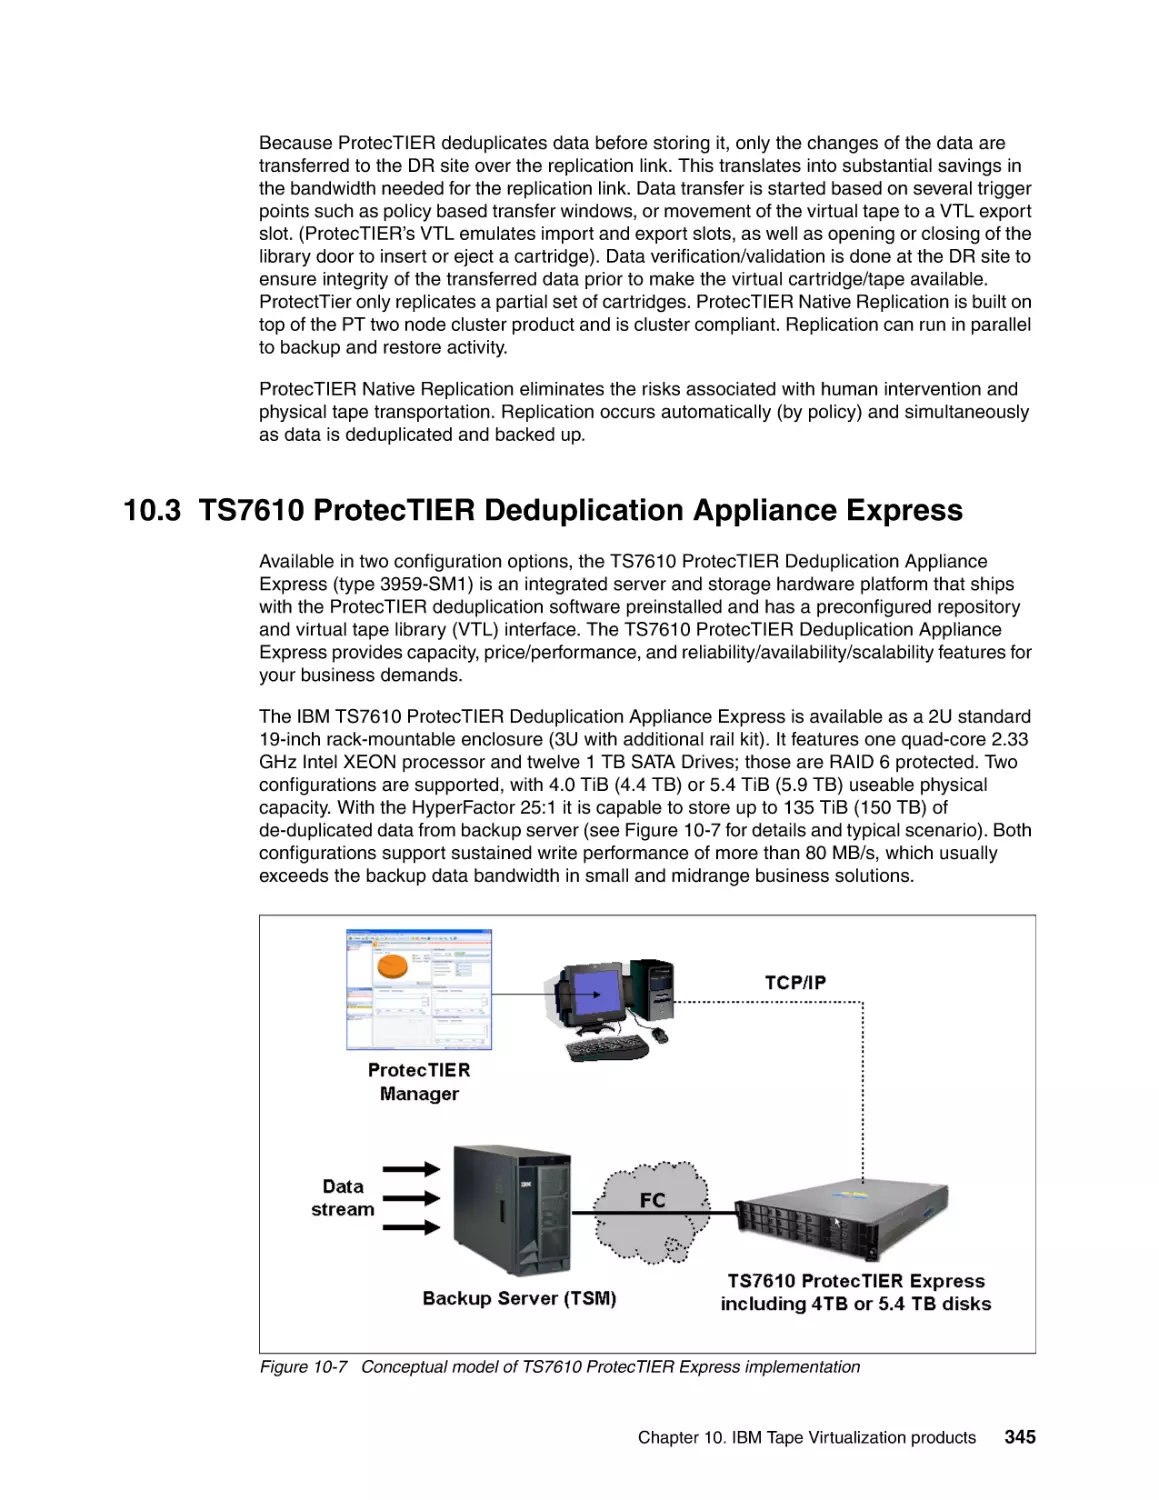 10.3 TS7610 ProtecTIER Deduplication Appliance Express